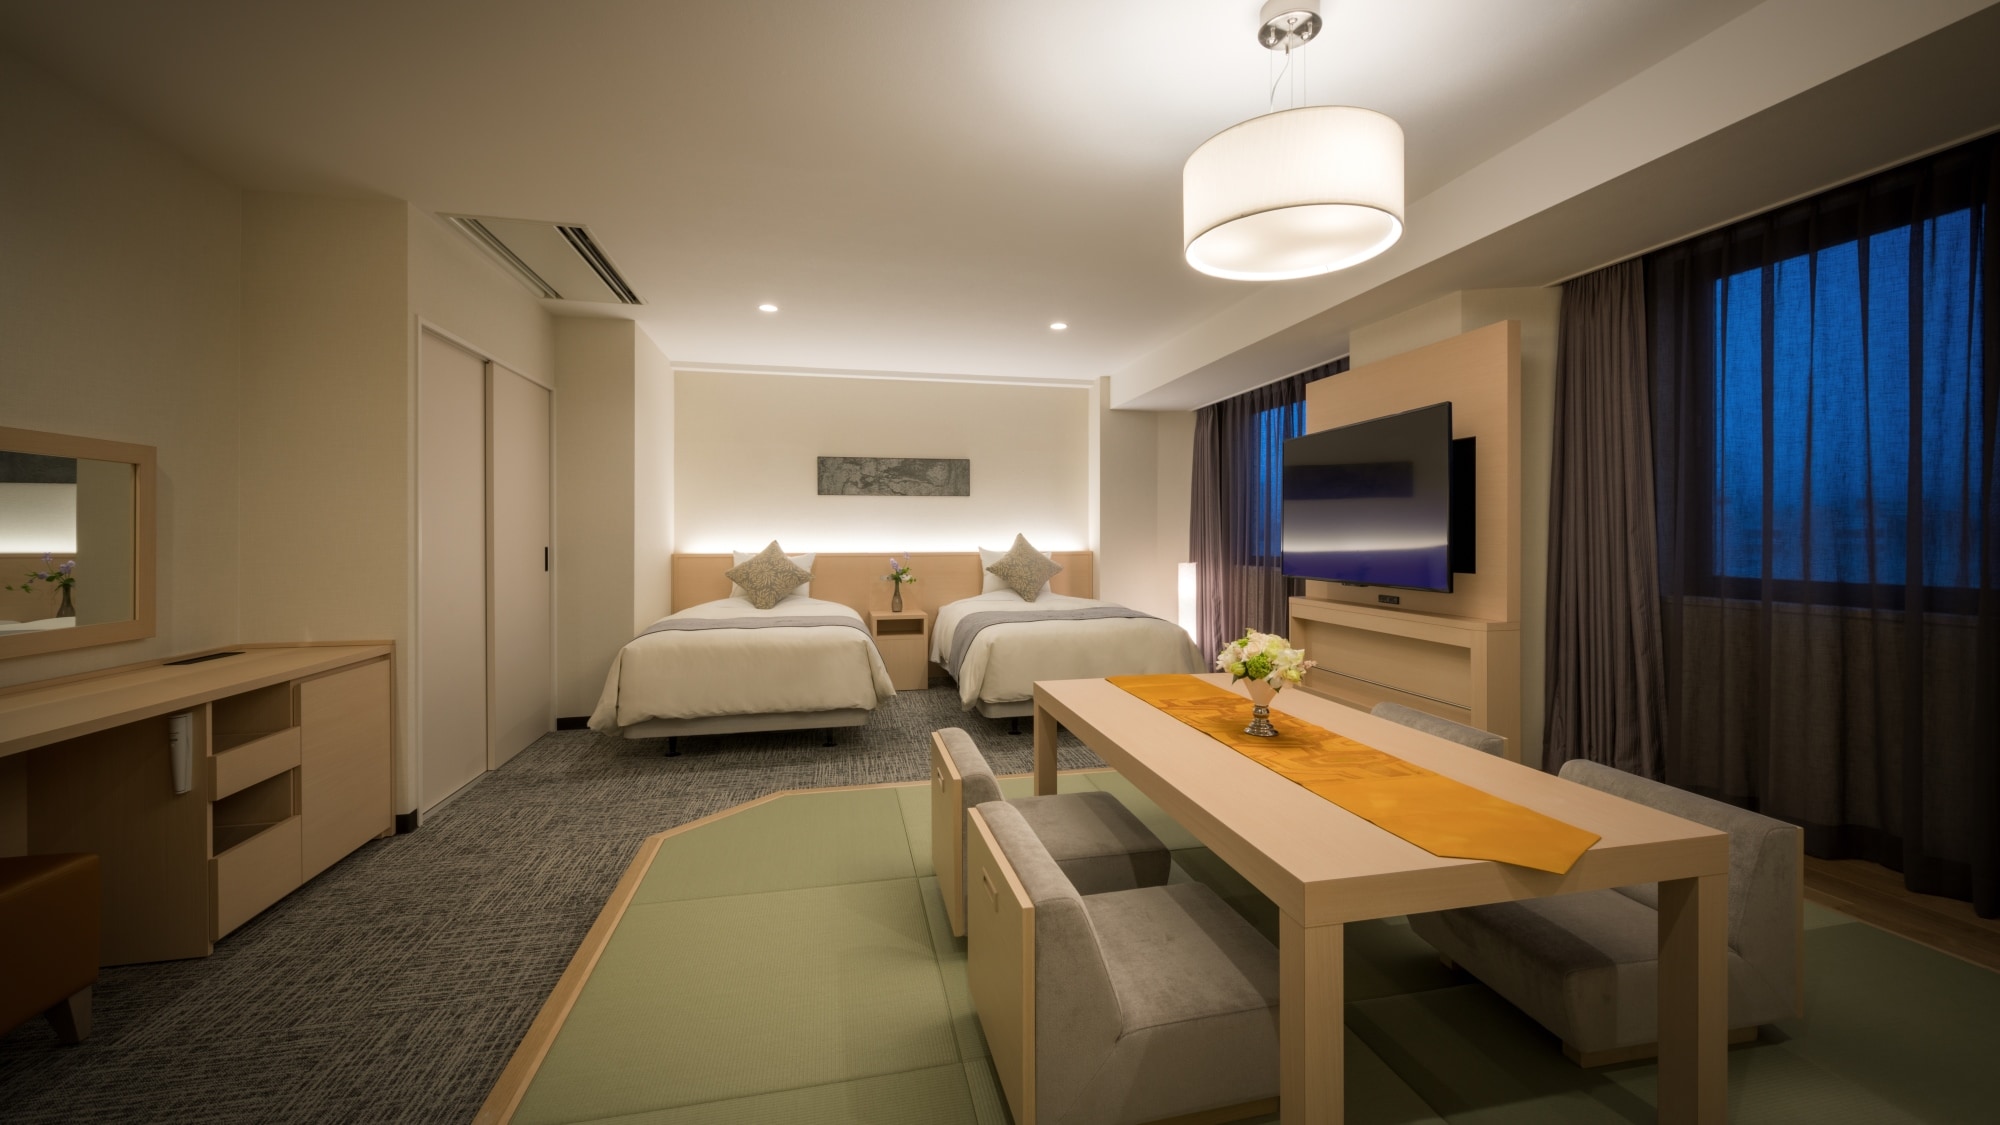 [Direnovasi tahun 2018 Kamar bergaya Jepang-Barat] Kamar bergaya Barat dengan dua tempat tidur dengan lebar 120 cm dan kamar khusus bergaya Jepang. Untuk hingga 4 orang